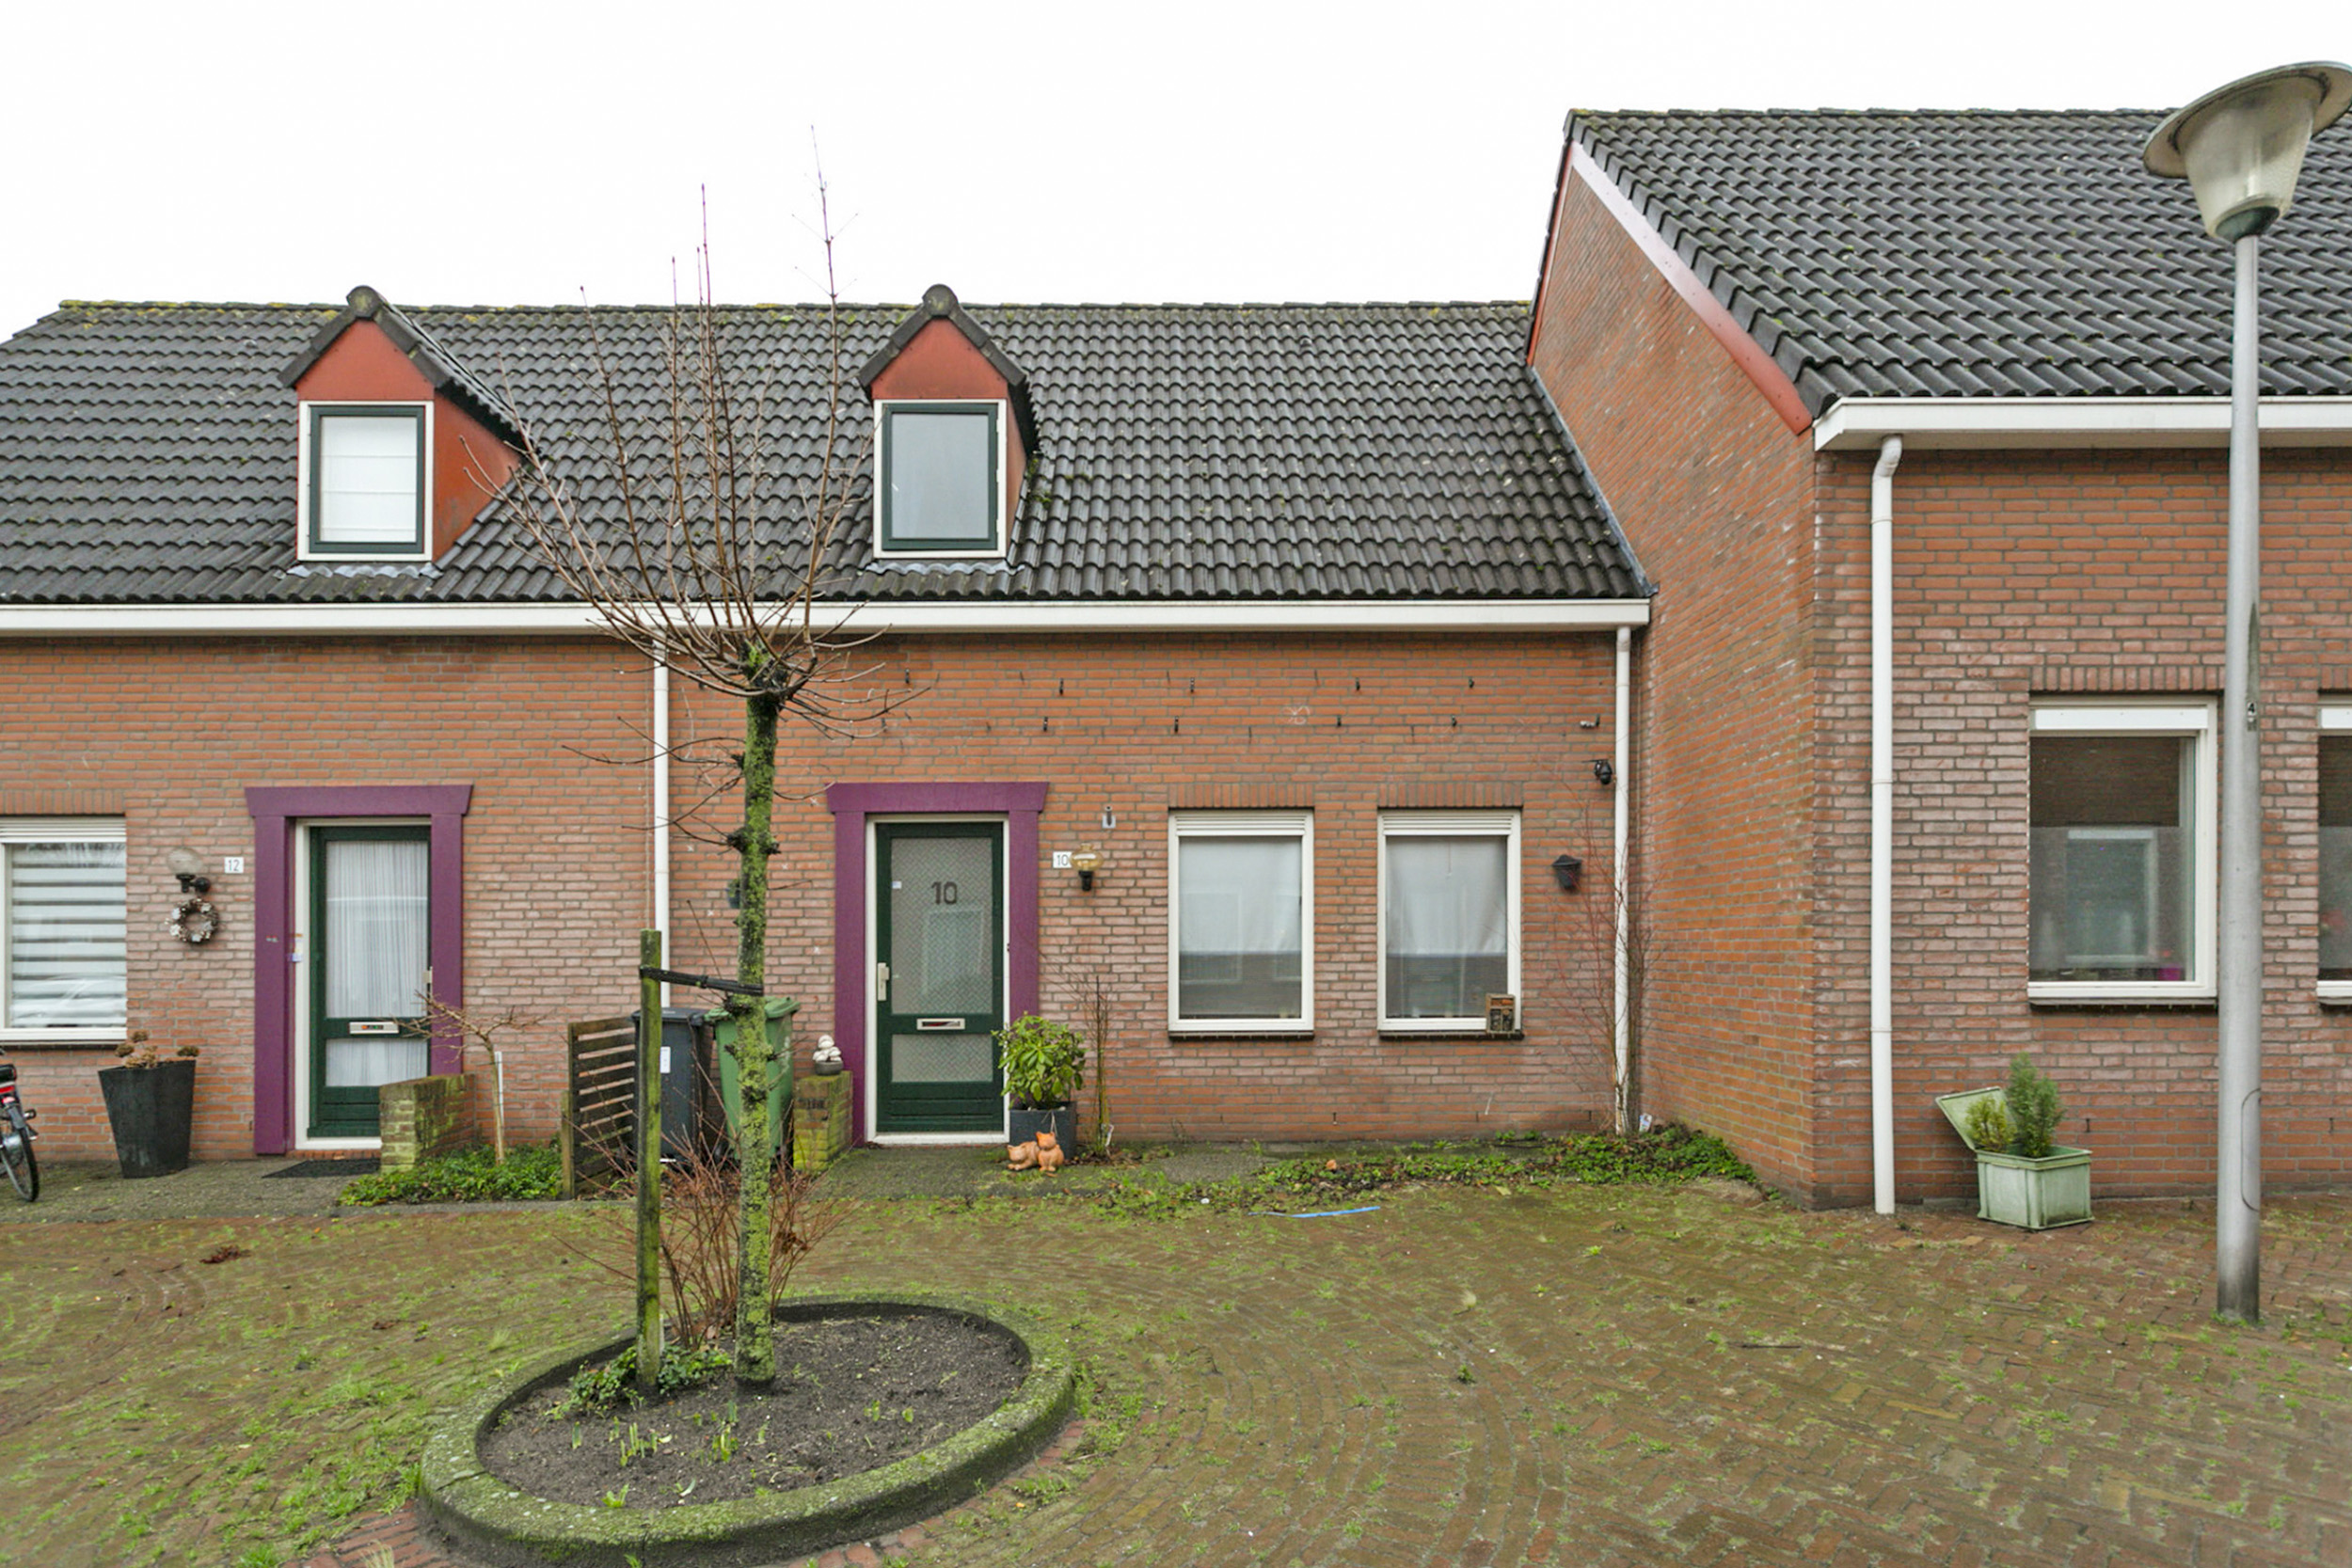 Heerdhof 10, 4881 EX Zundert, Nederland